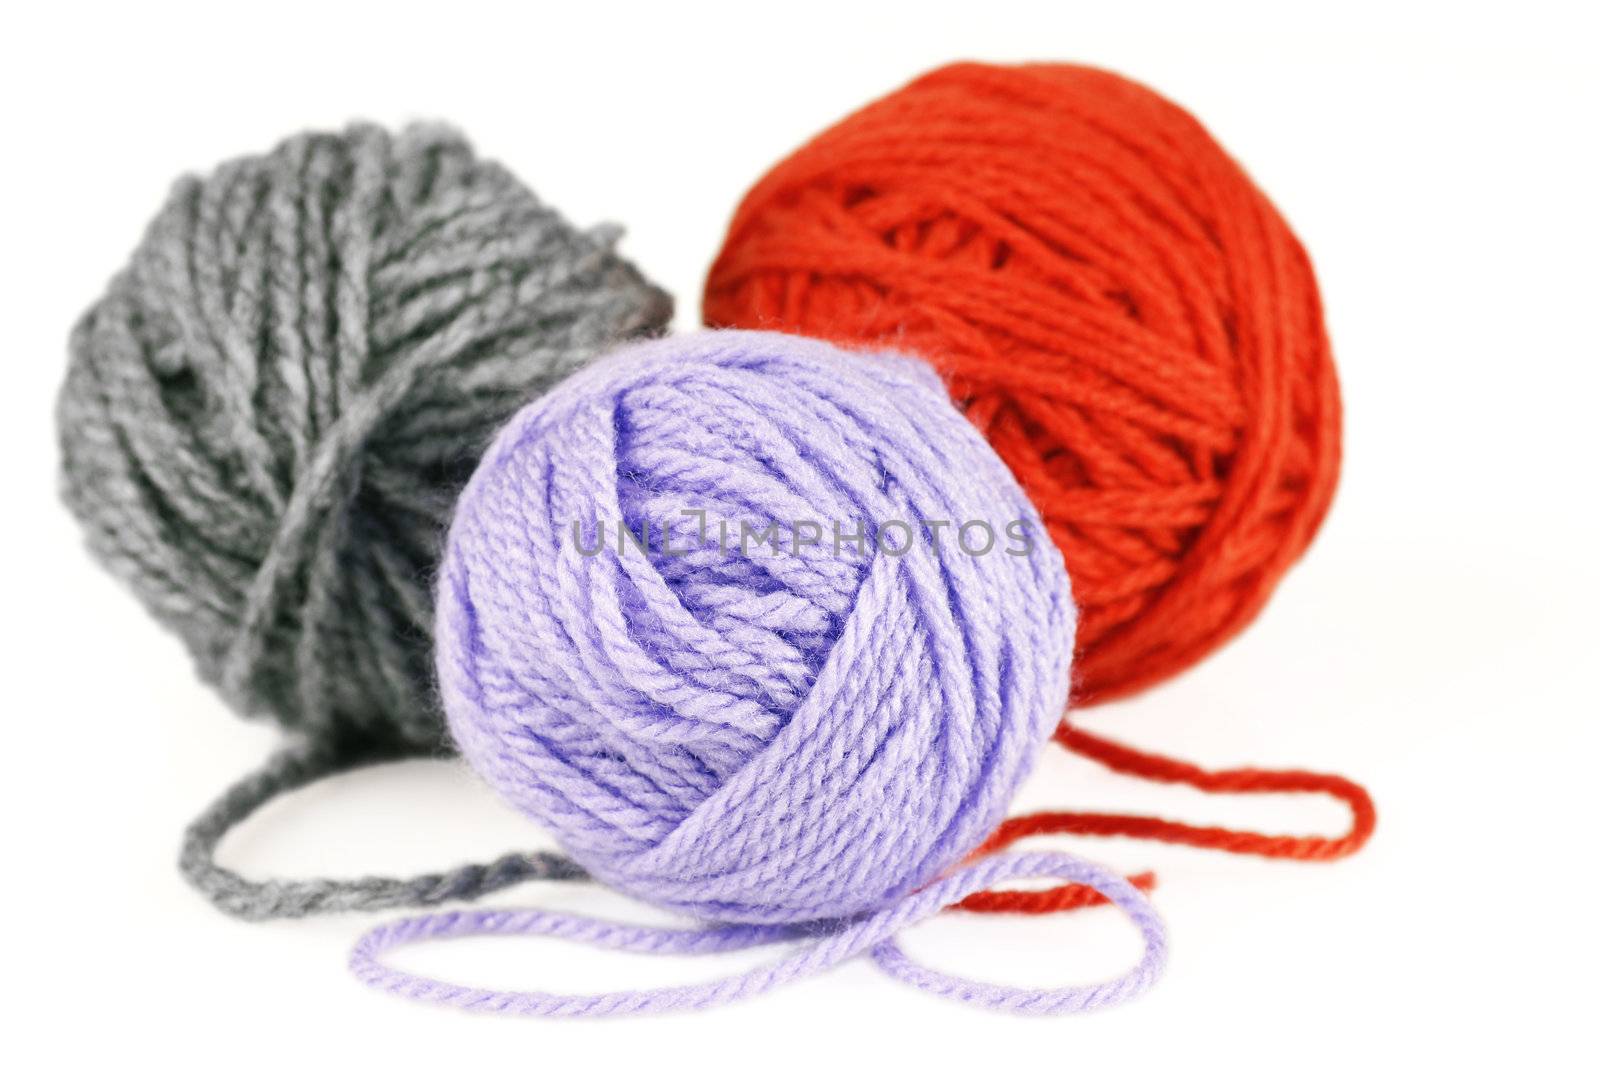 Macro shot of balls of puple,orange and grey wool or yarn, great colorful craft background.